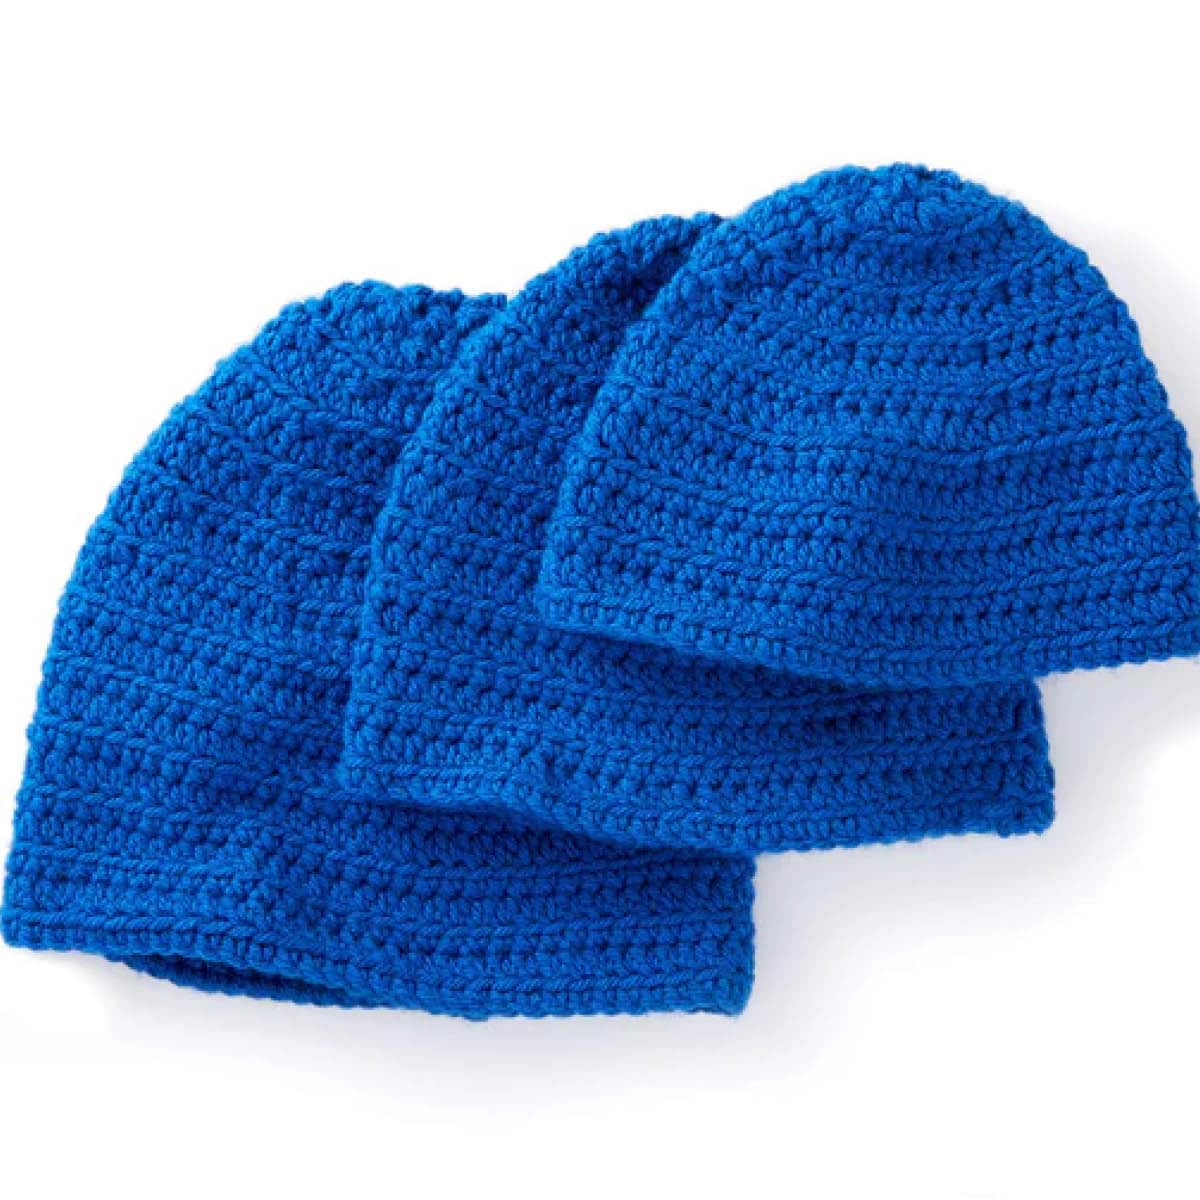 Toddler to Adult Family Ridge Crochet Hat Pattern